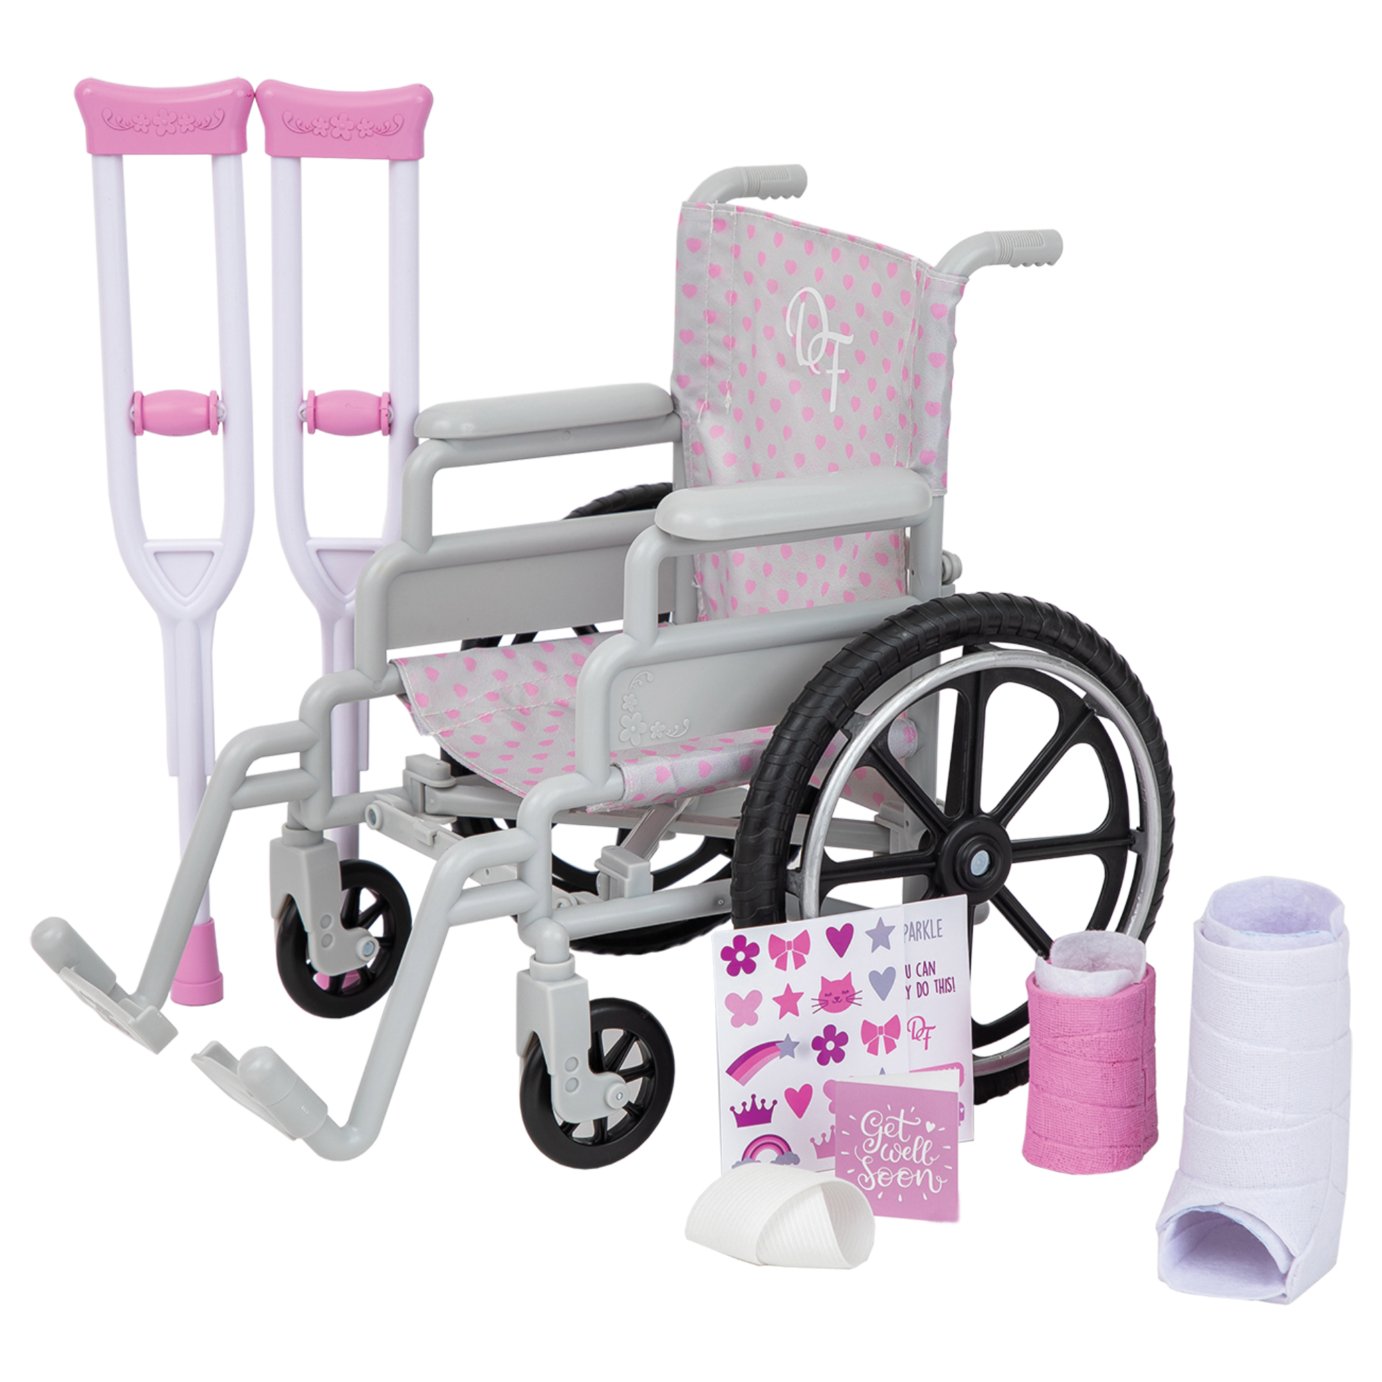 Designafriend Wheelchair and Crutches Playset Review